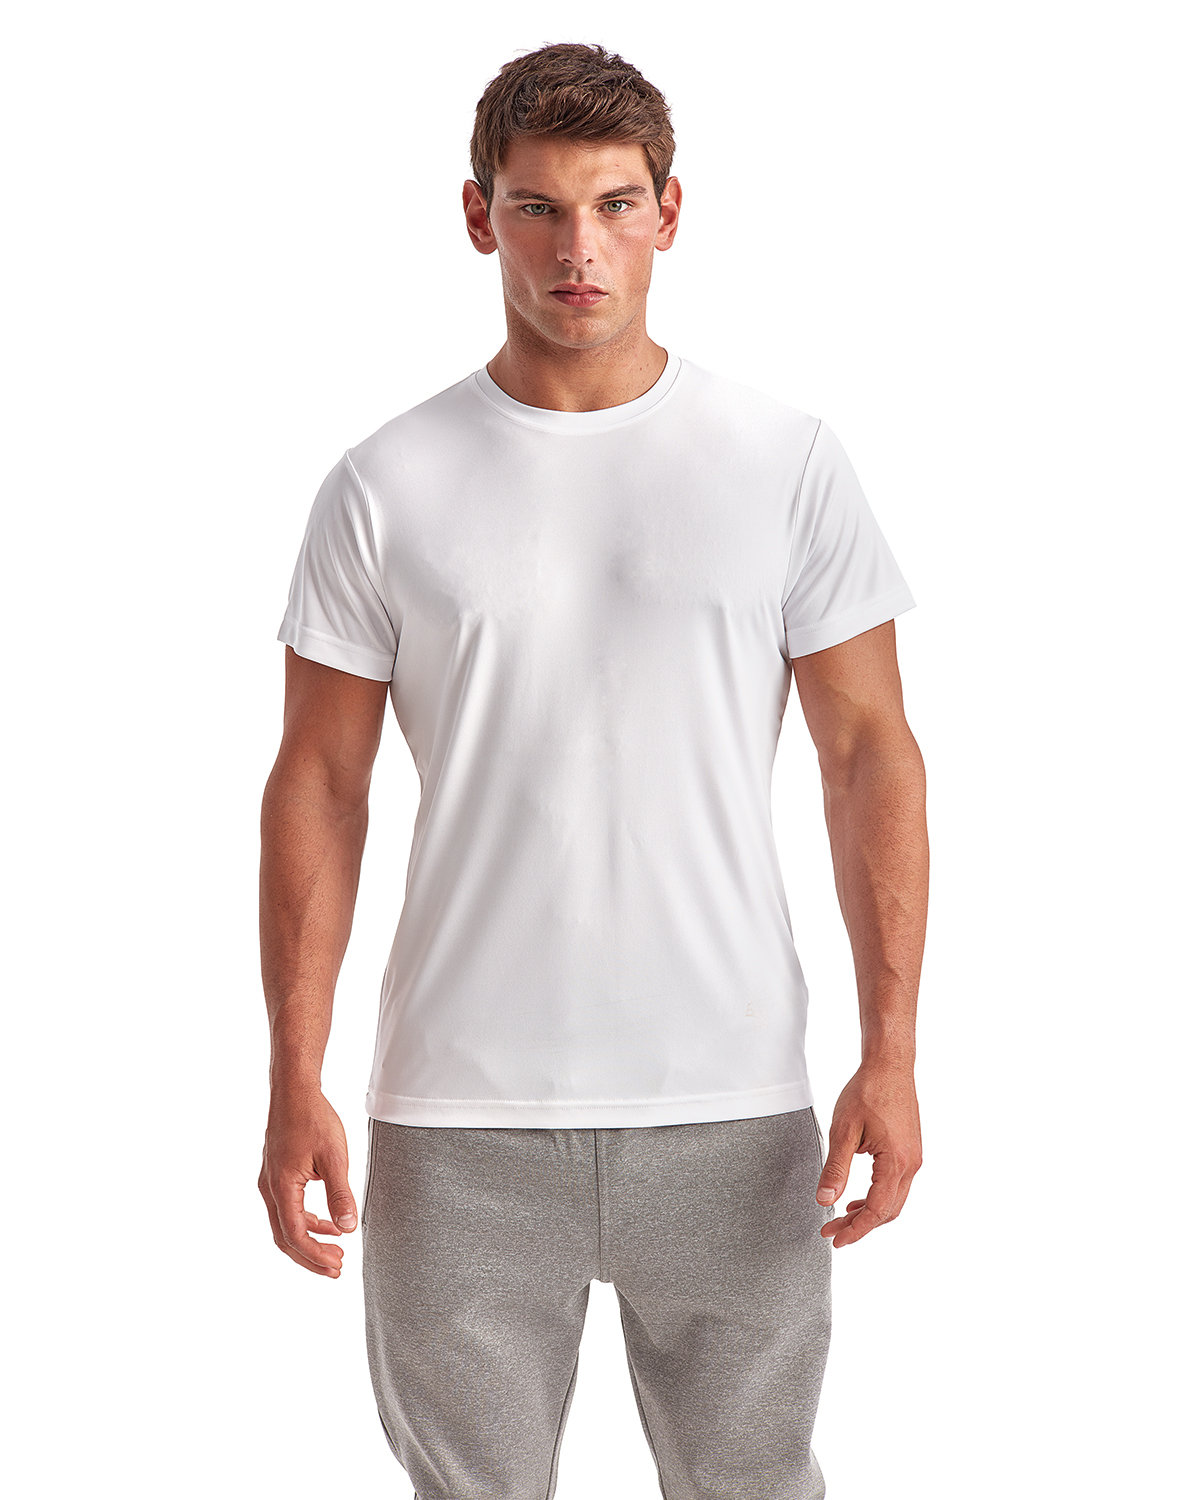 TriDri Unisex Recycled Performance T-Shirt white 